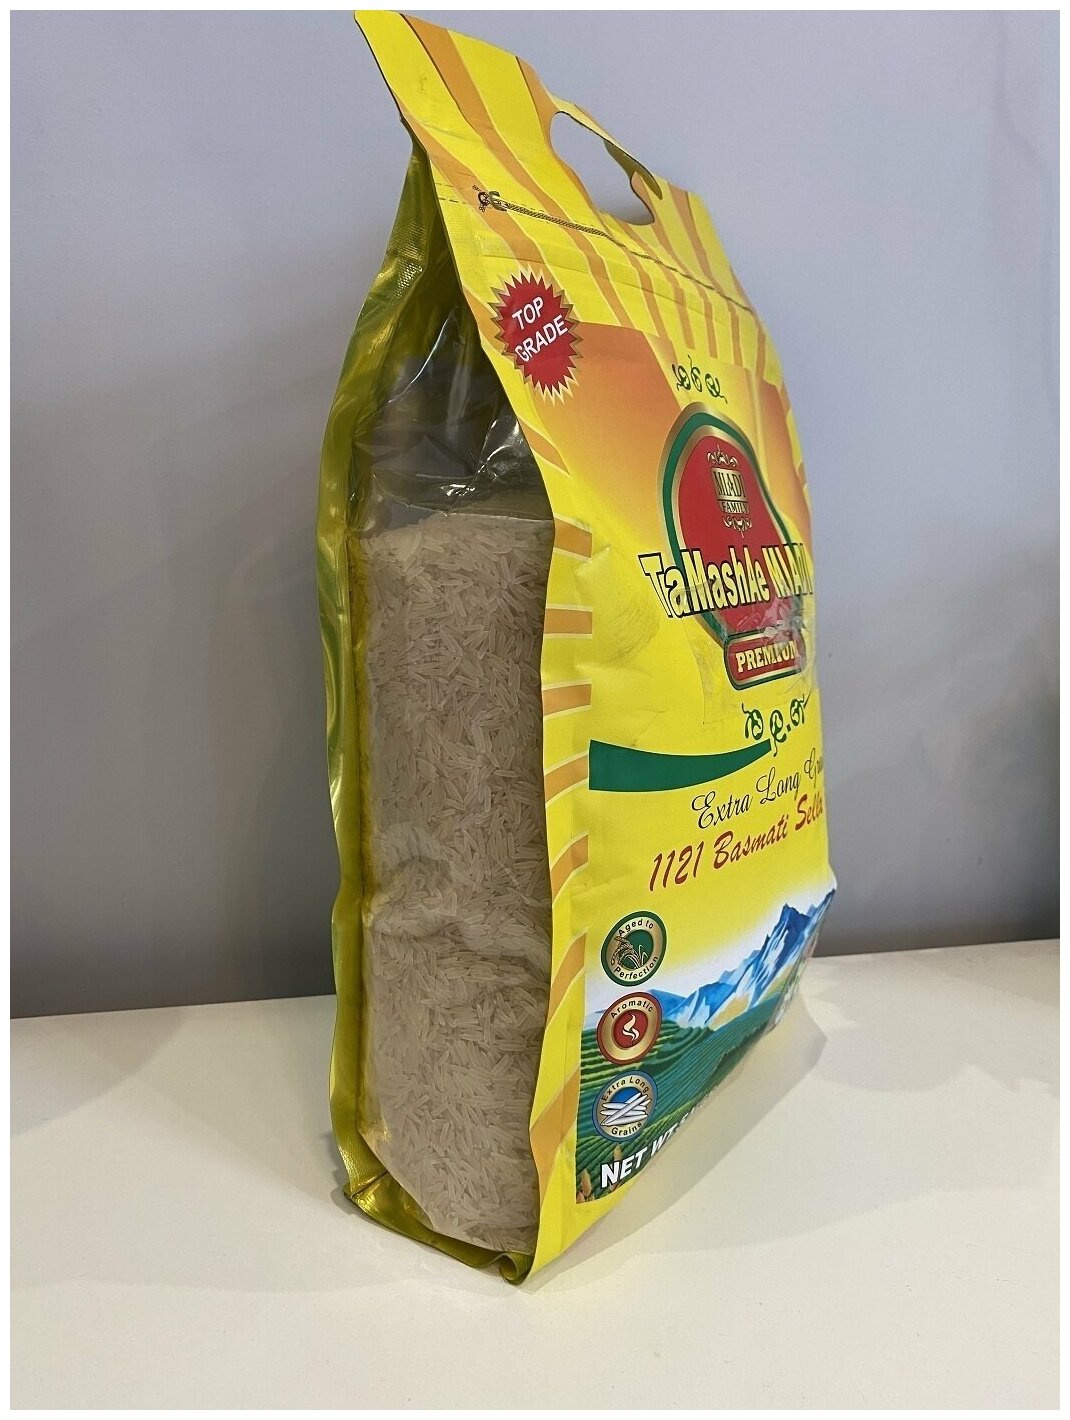 Рис ТaMashae Miadi Basmati Premium пропаренный 2 кг - фотография № 2